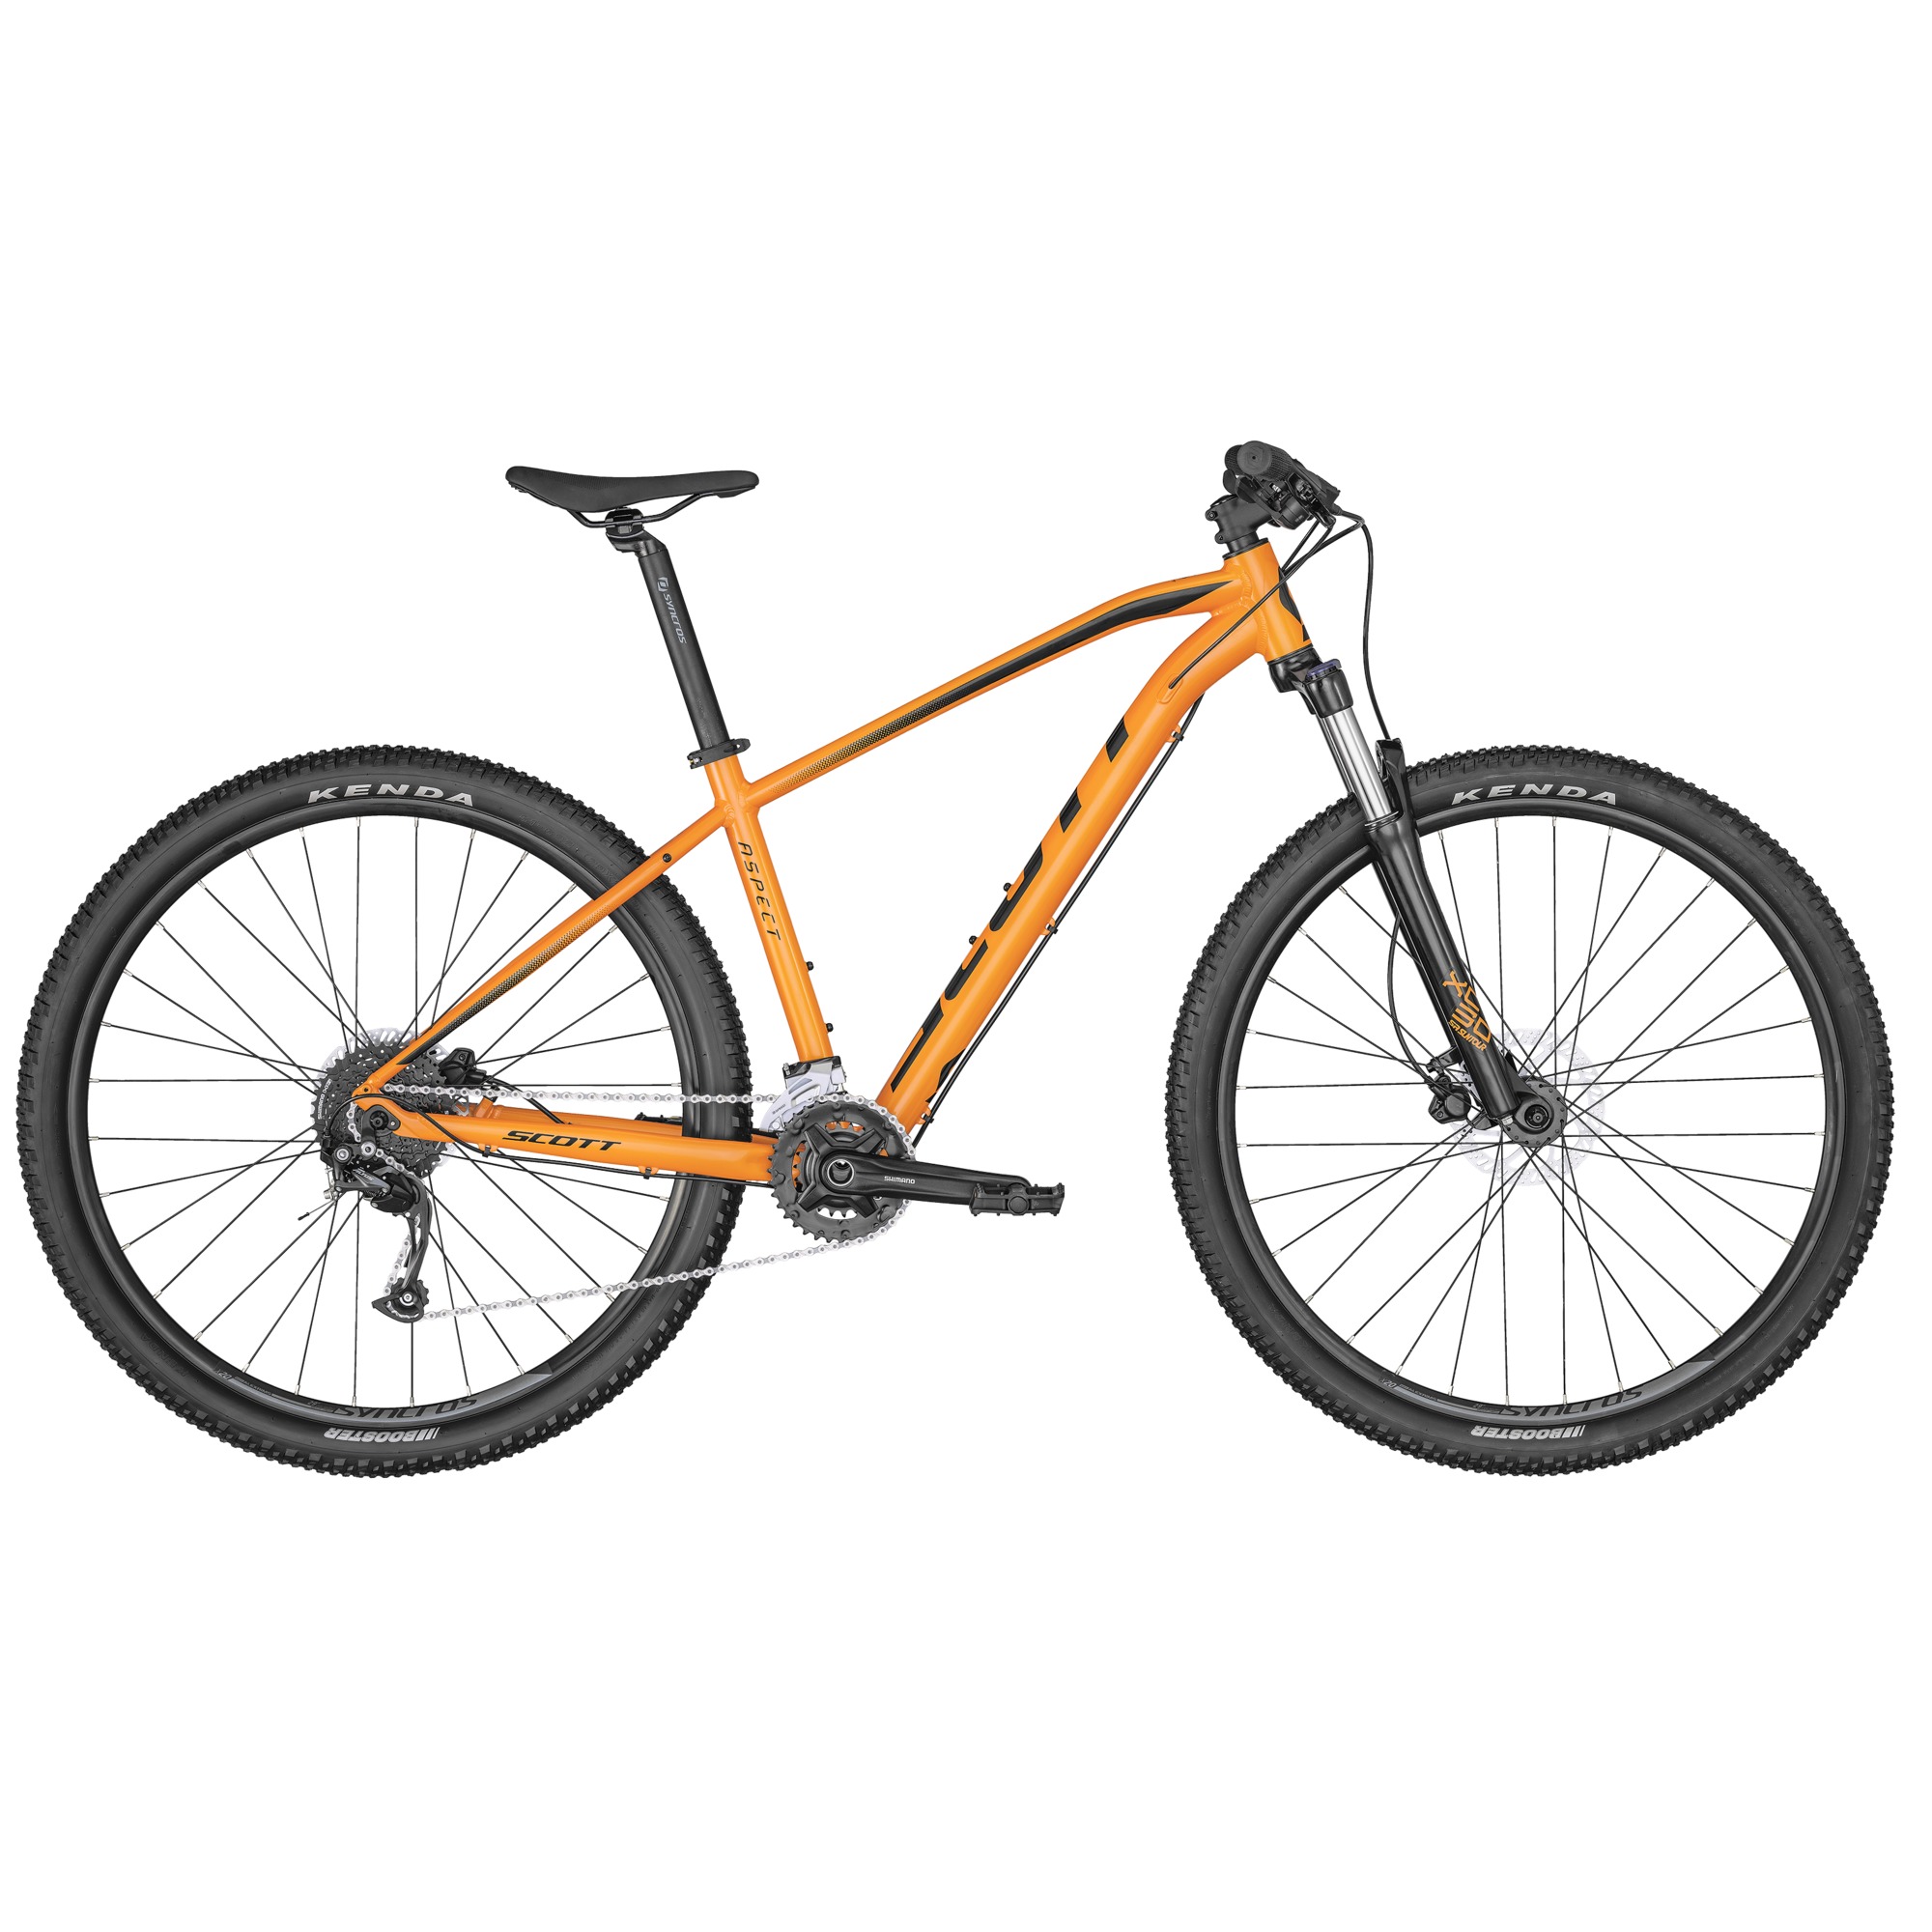 Scott Aspect orange - Cycles